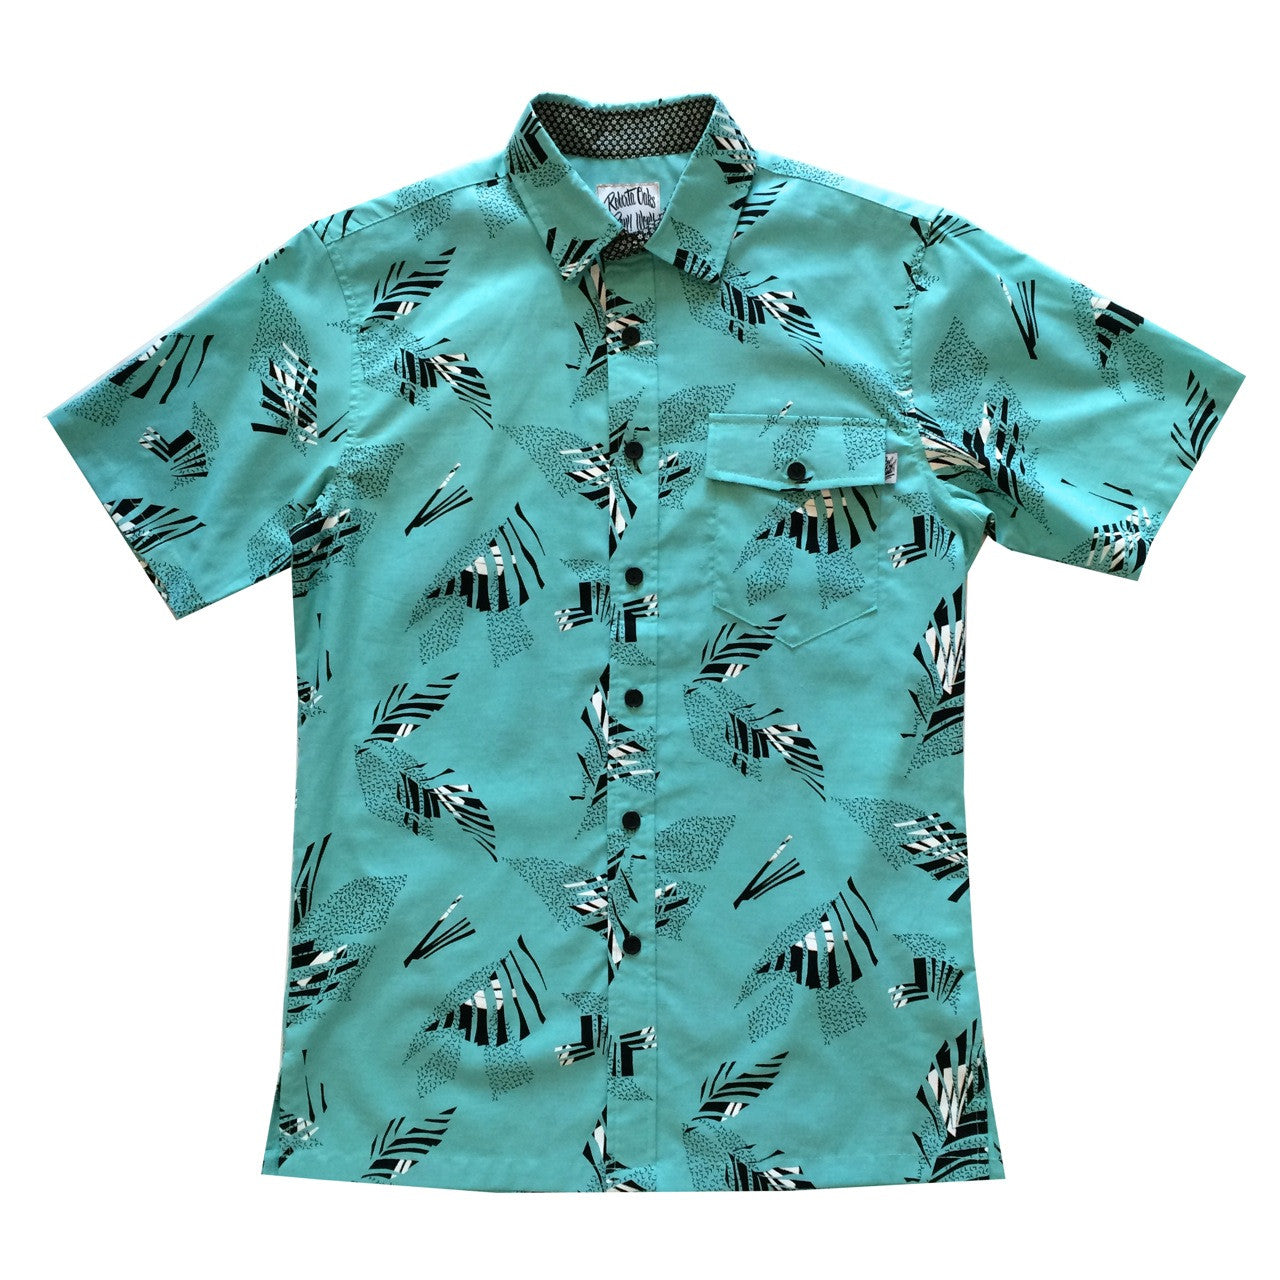 Pow Wow Hawaii 2015 Kamani Shirt - SOLD OUT